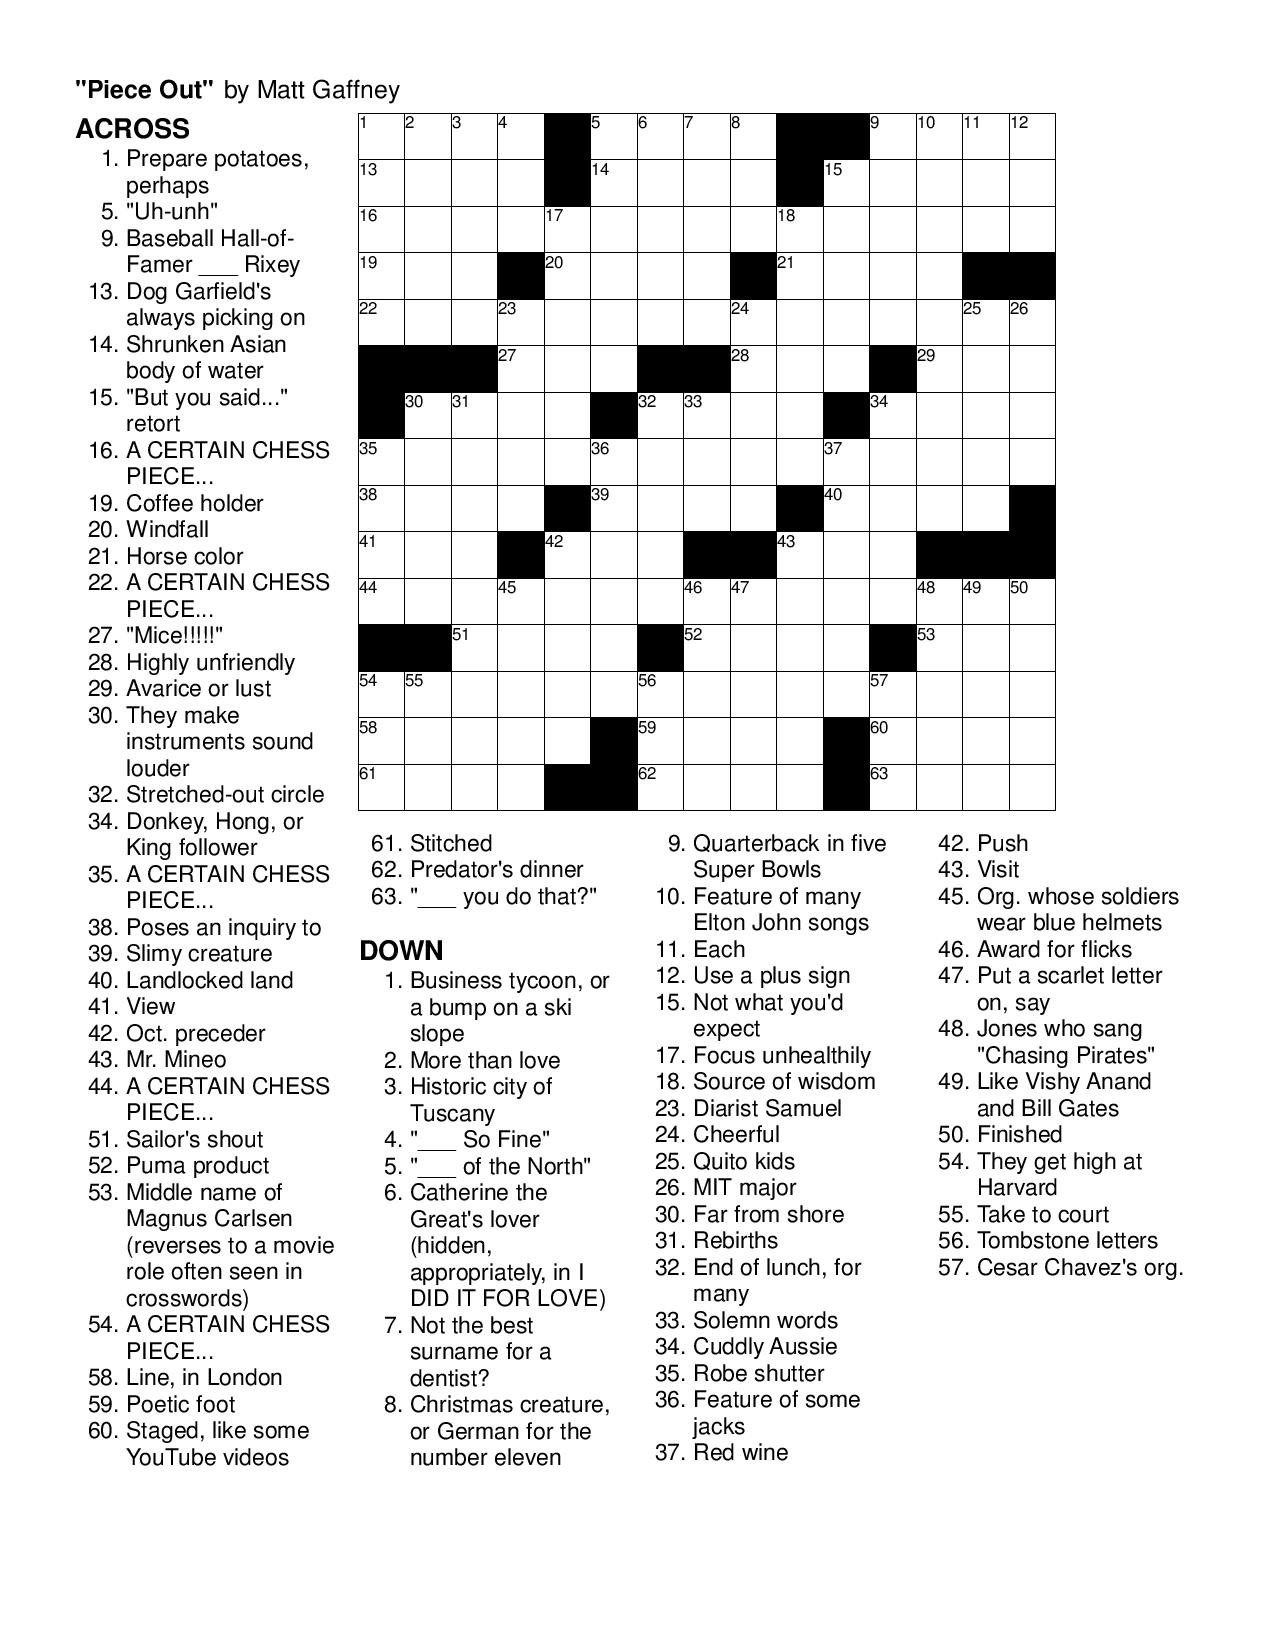 Free Printable Sunday Crossword Puzzles Merl Reagle 39 s Sunday 